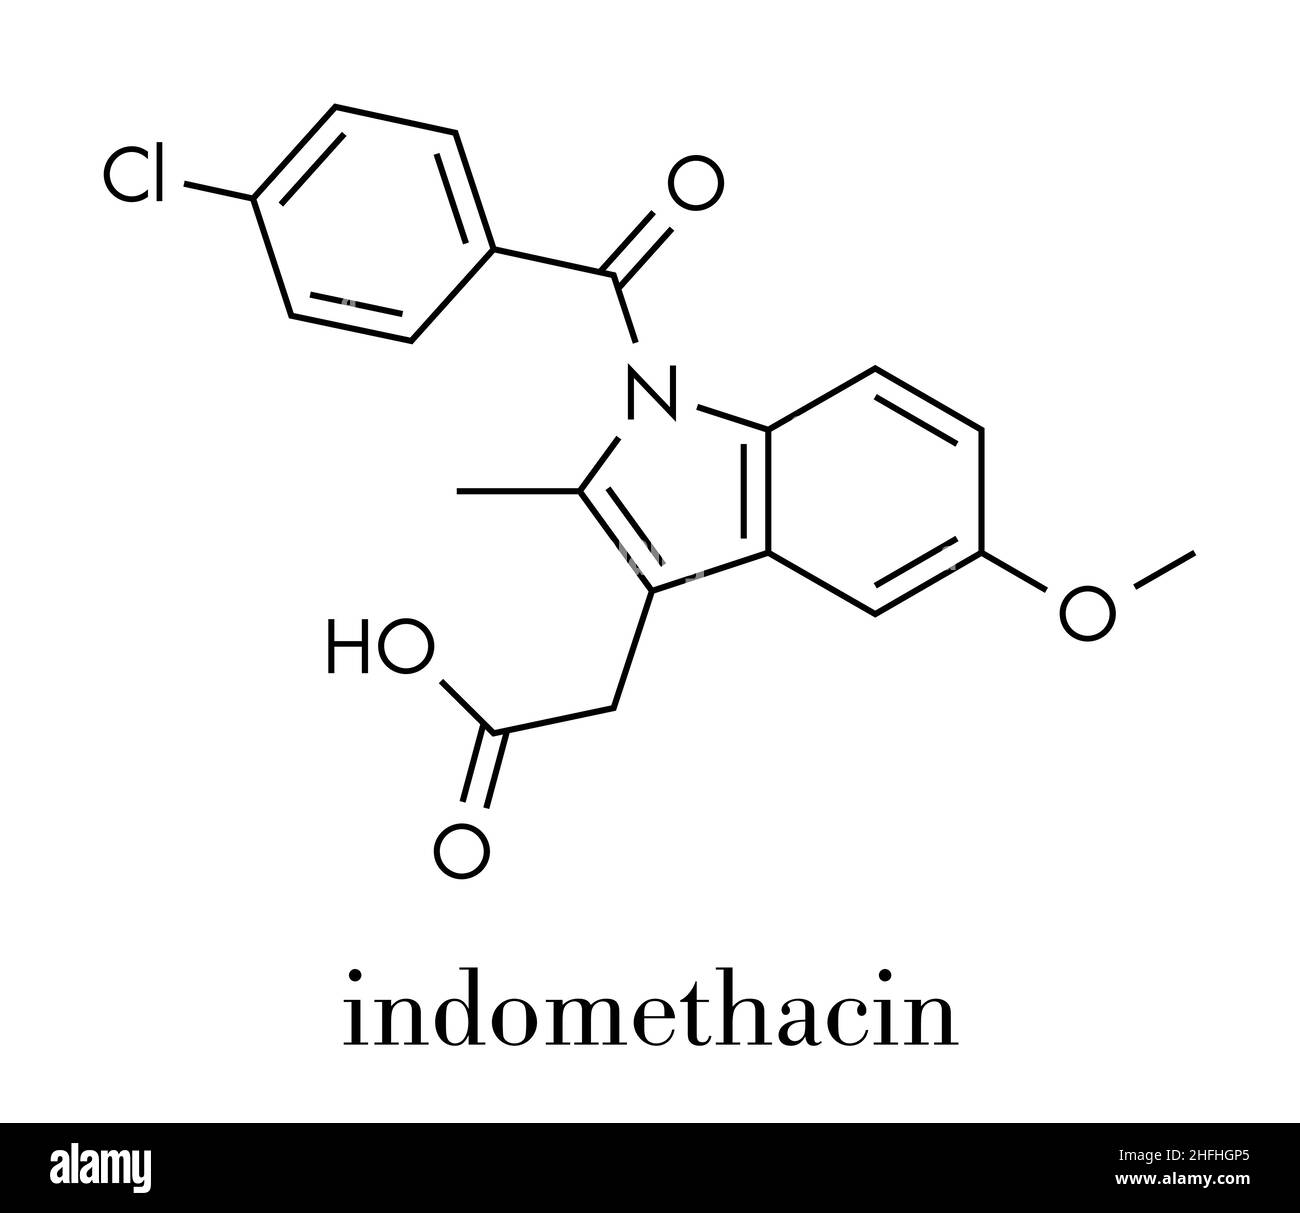 Indomethacin (indometacin) non-steroidal anti-inflammatory drug (NSAID) molecule. Skeletal formula. Stock Vector